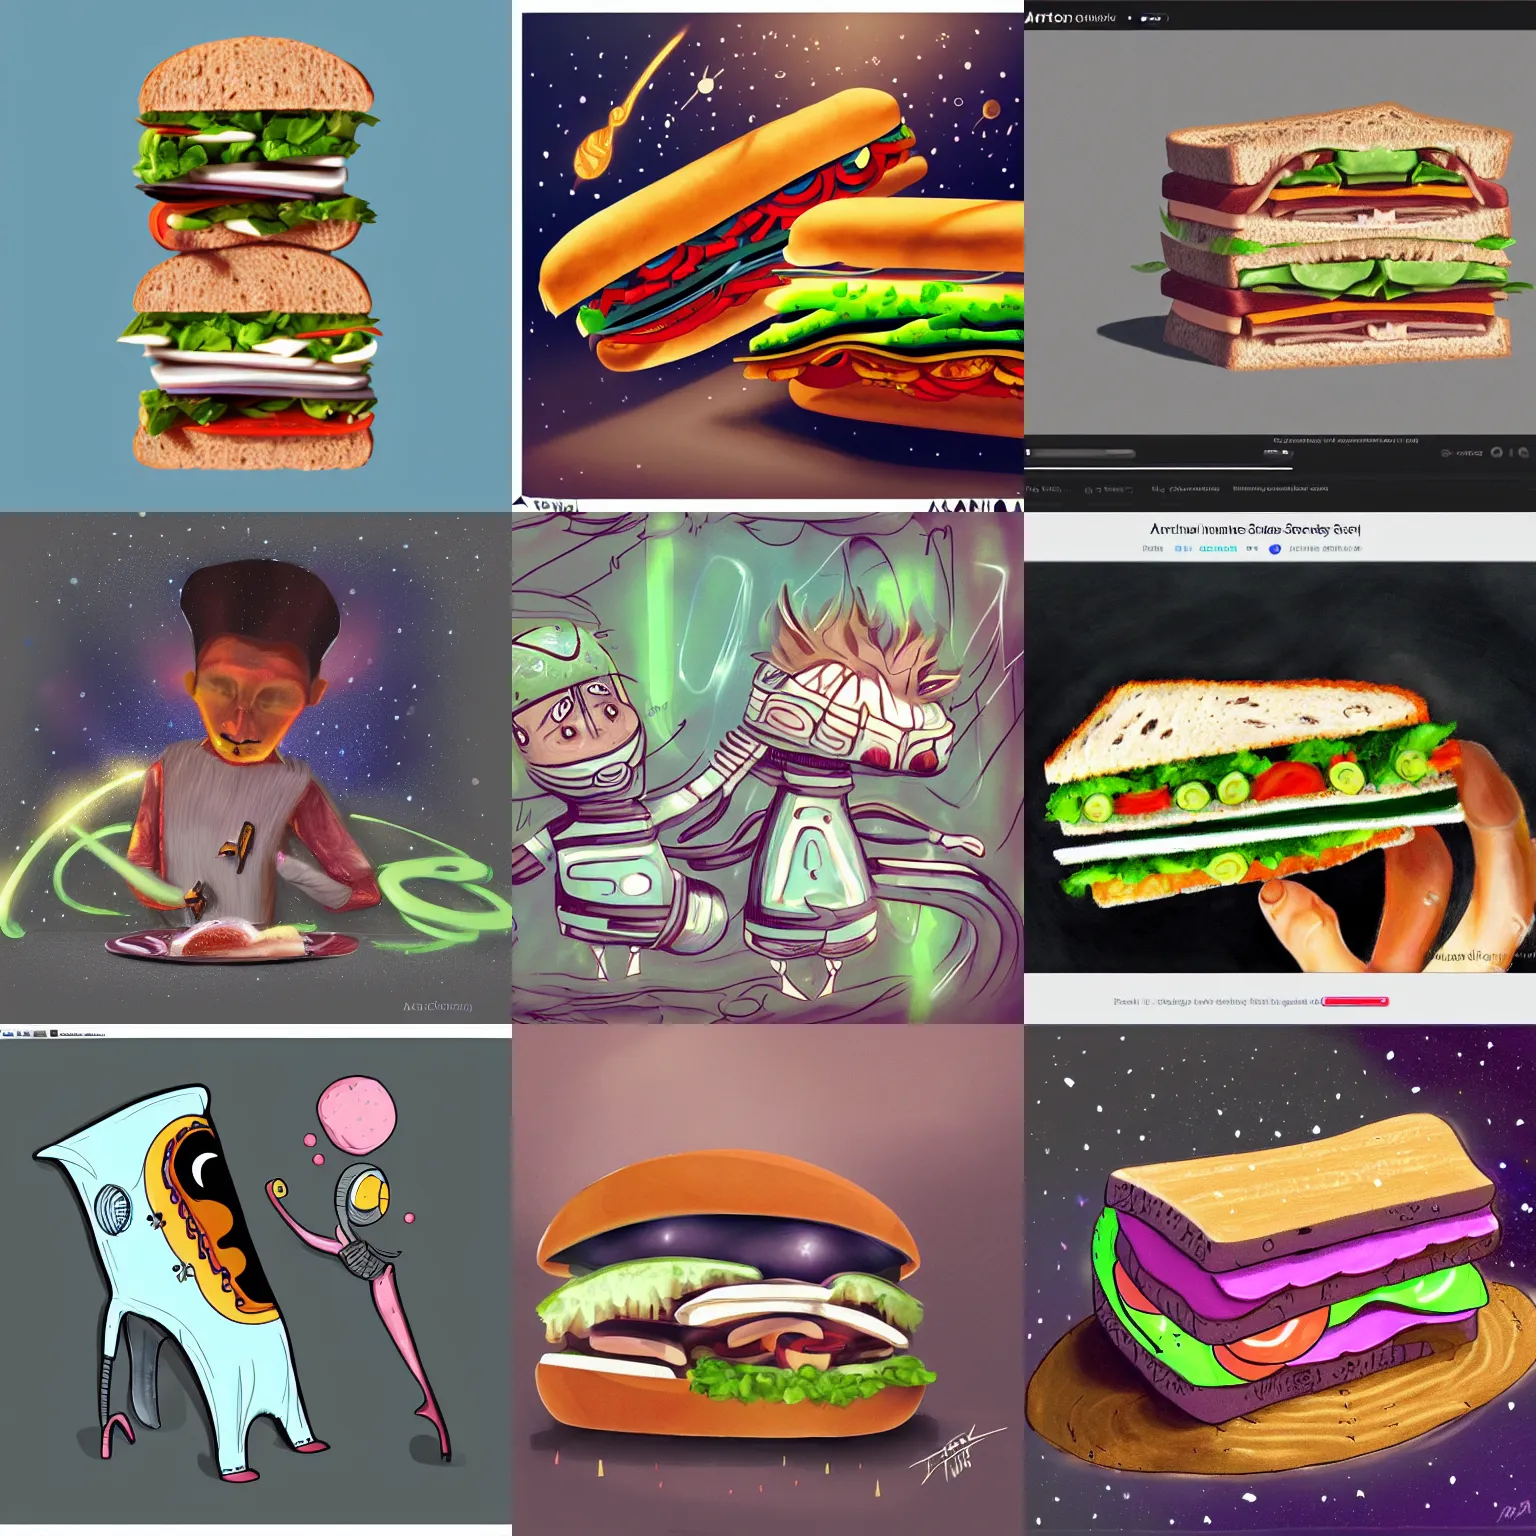 Prompt: An intergalactic Sandwich trending on art station